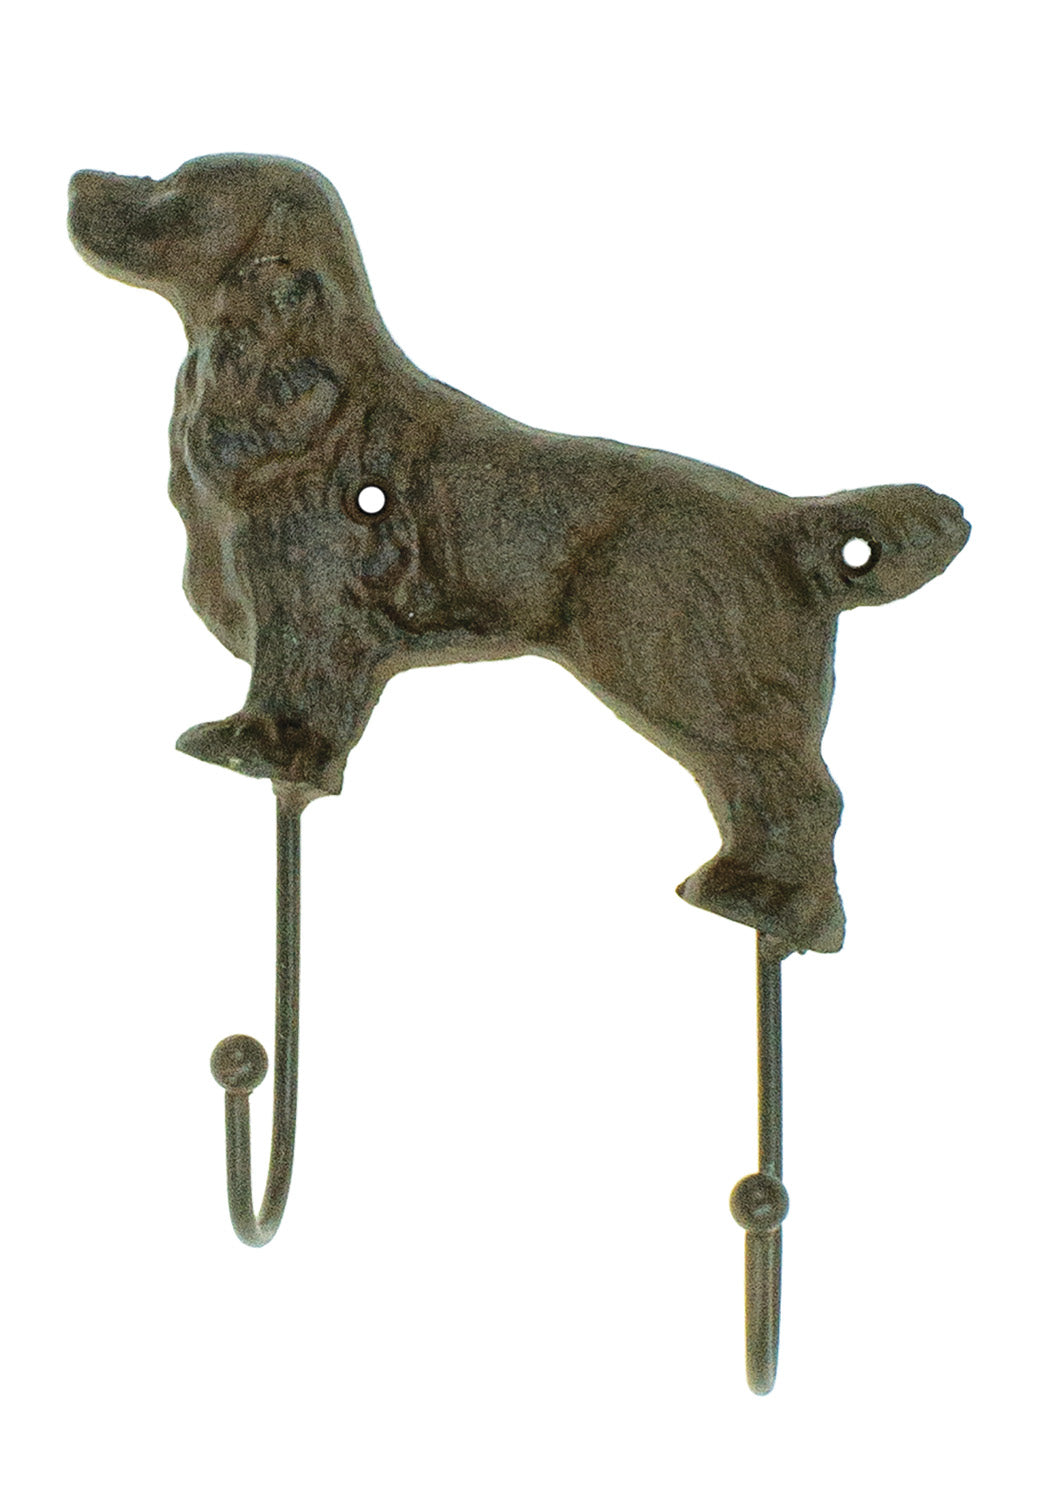 Mounted cast iron dog leash holder with two hooks